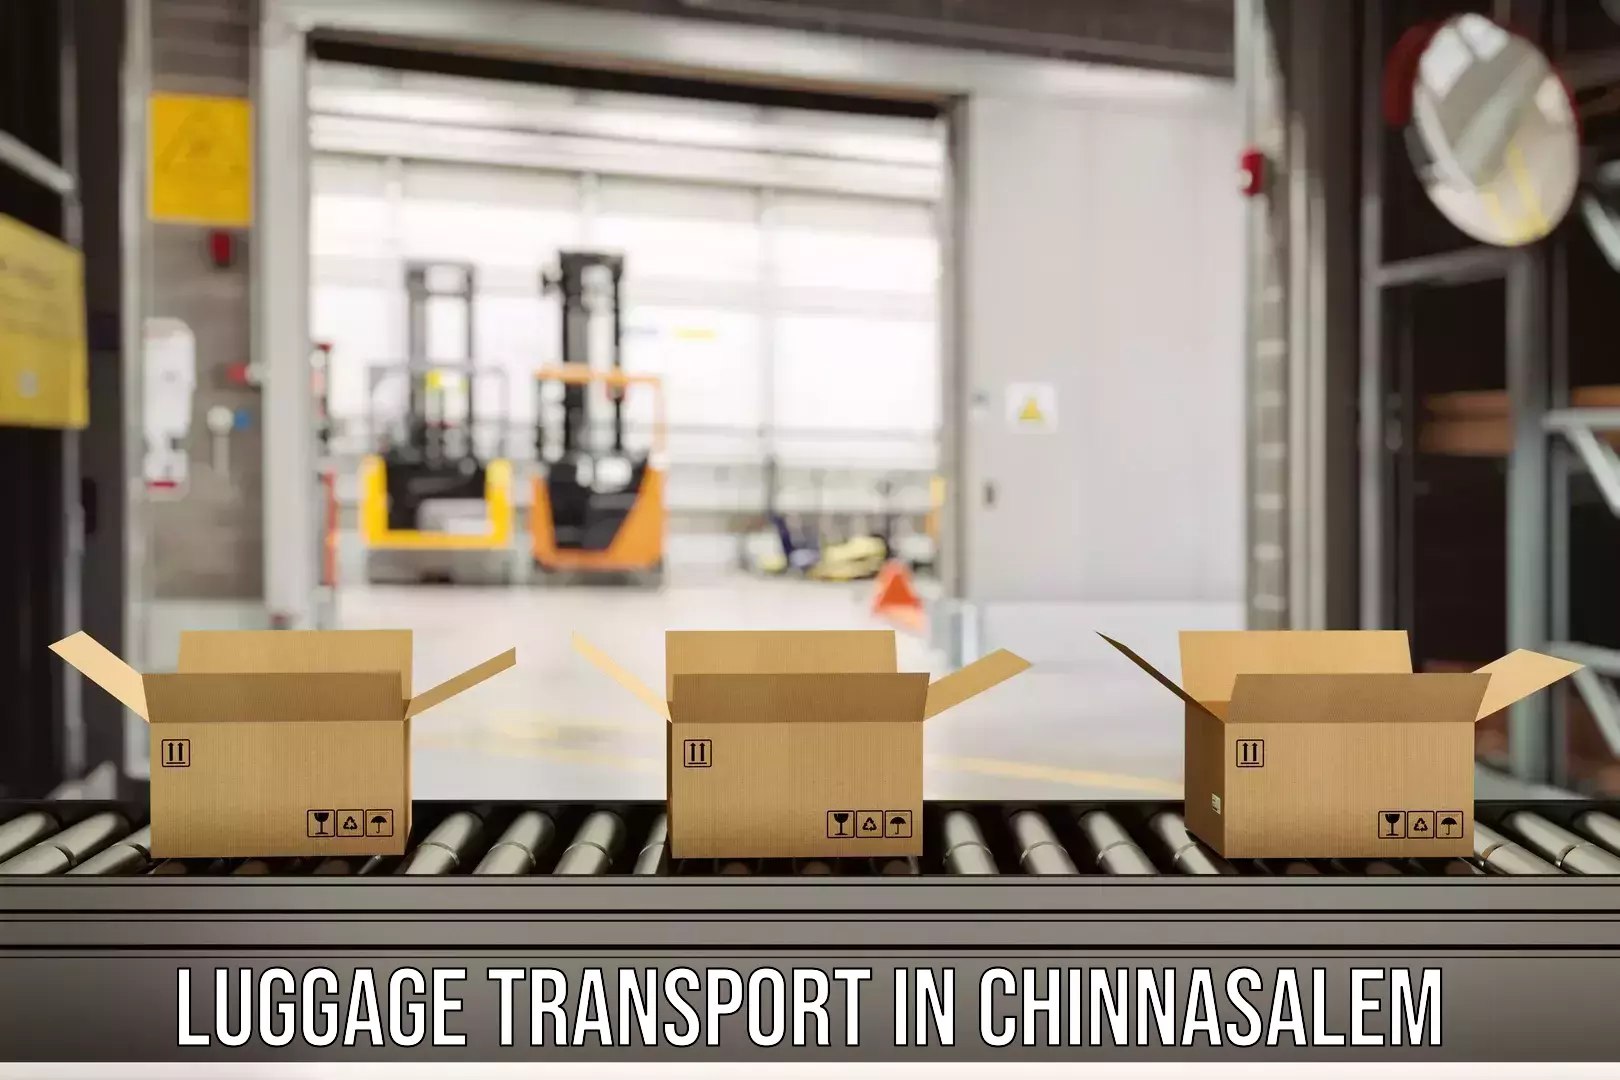 Luggage shipment tracking in Chinnasalem